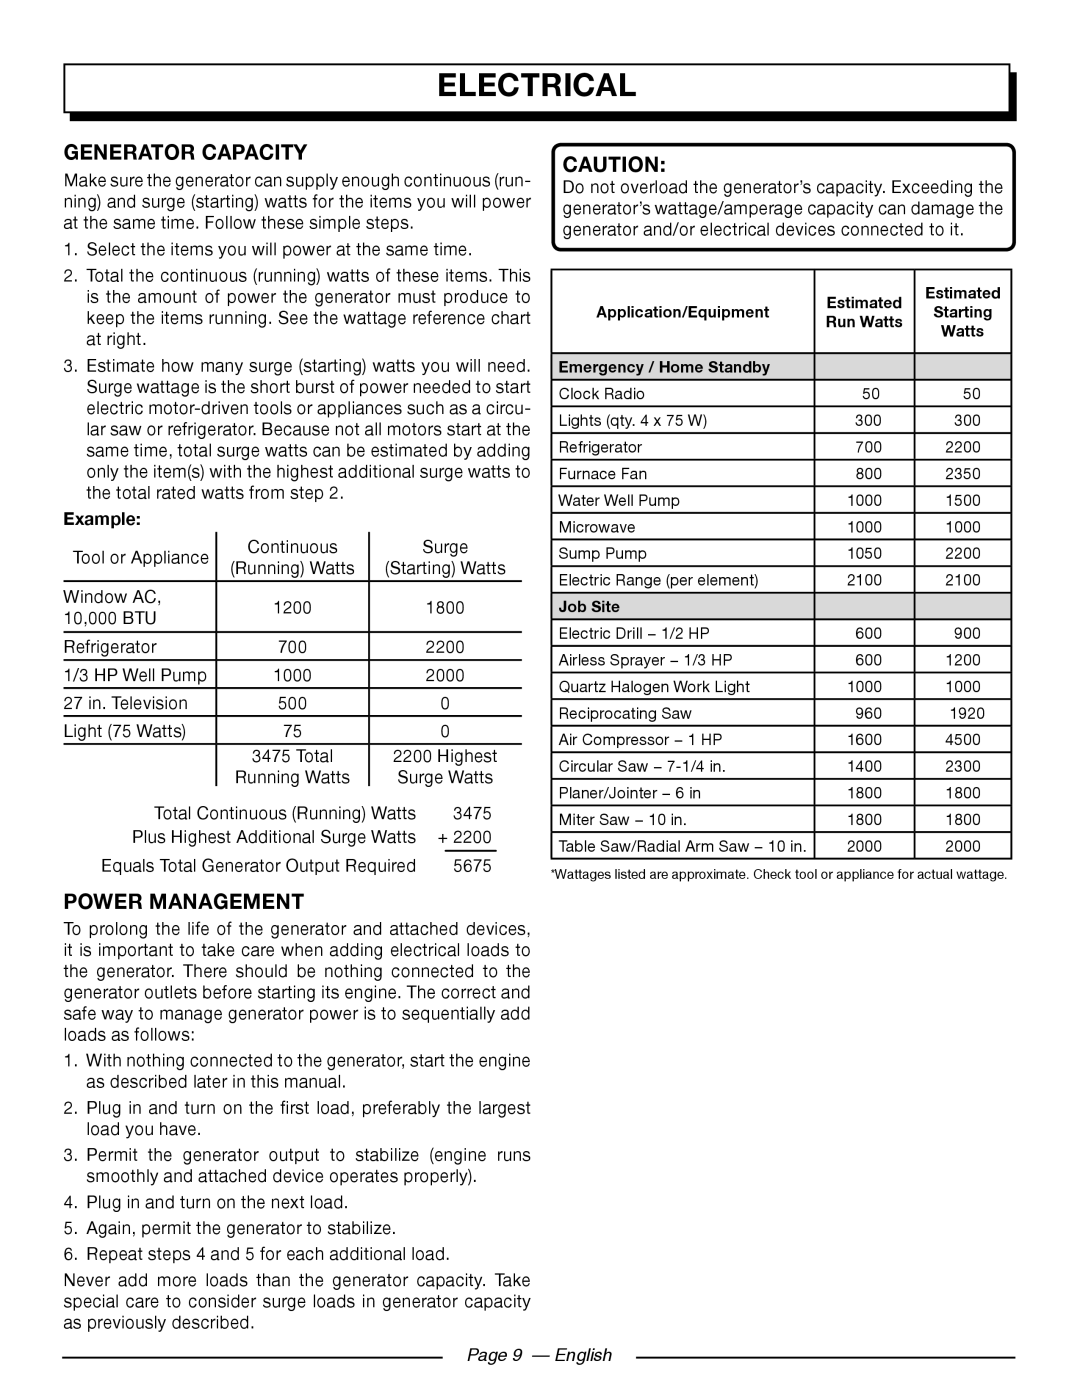 Homelite UT905011 manuel dutilisation Generator Capacity, Power Management, Example, Page 9 — English, Electrical 